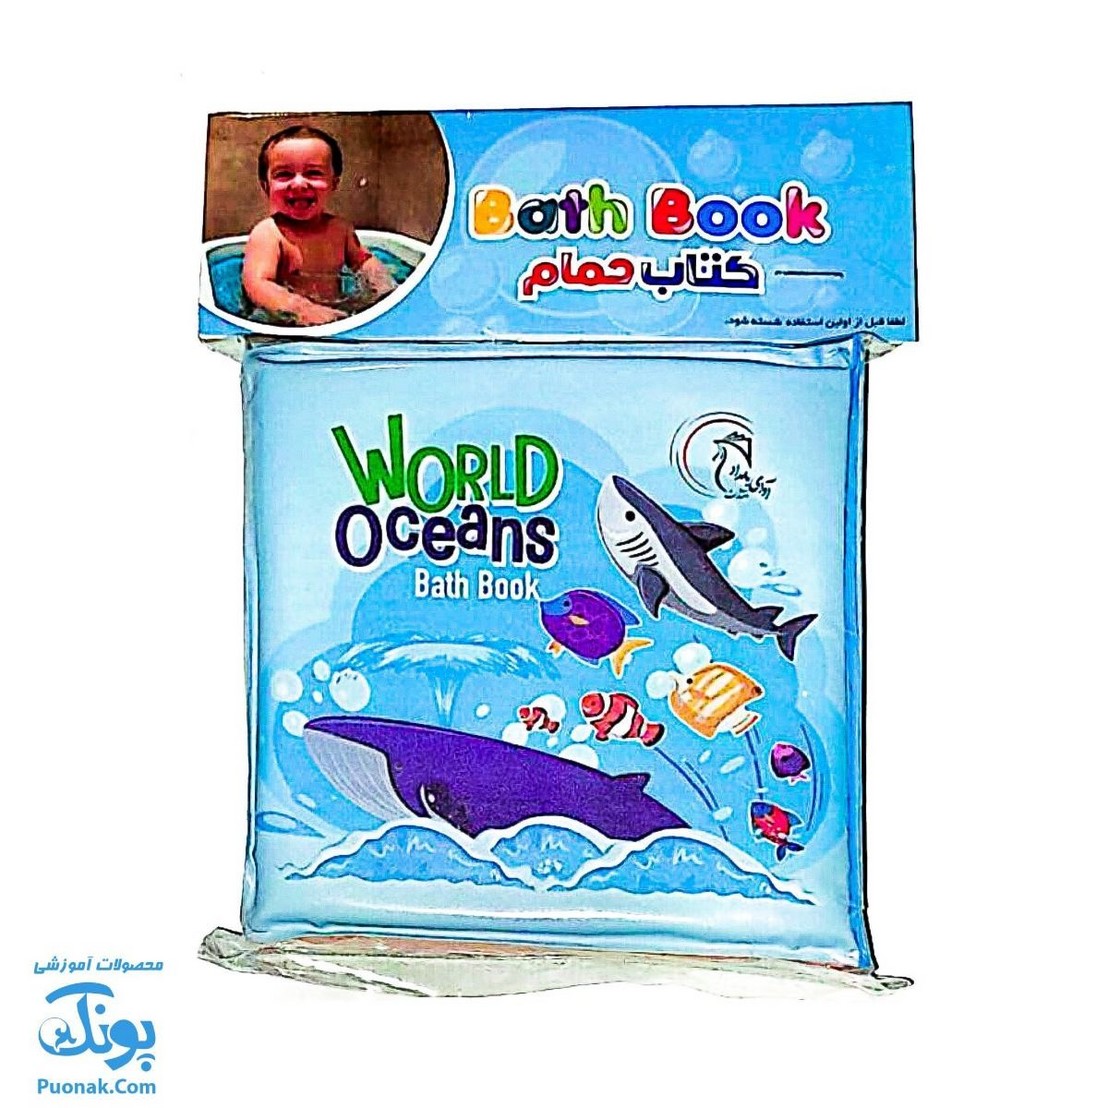 کتاب حمام حیوانات دریایی فارسی انگلیسی Bath Book World Oceans آوای بامداد